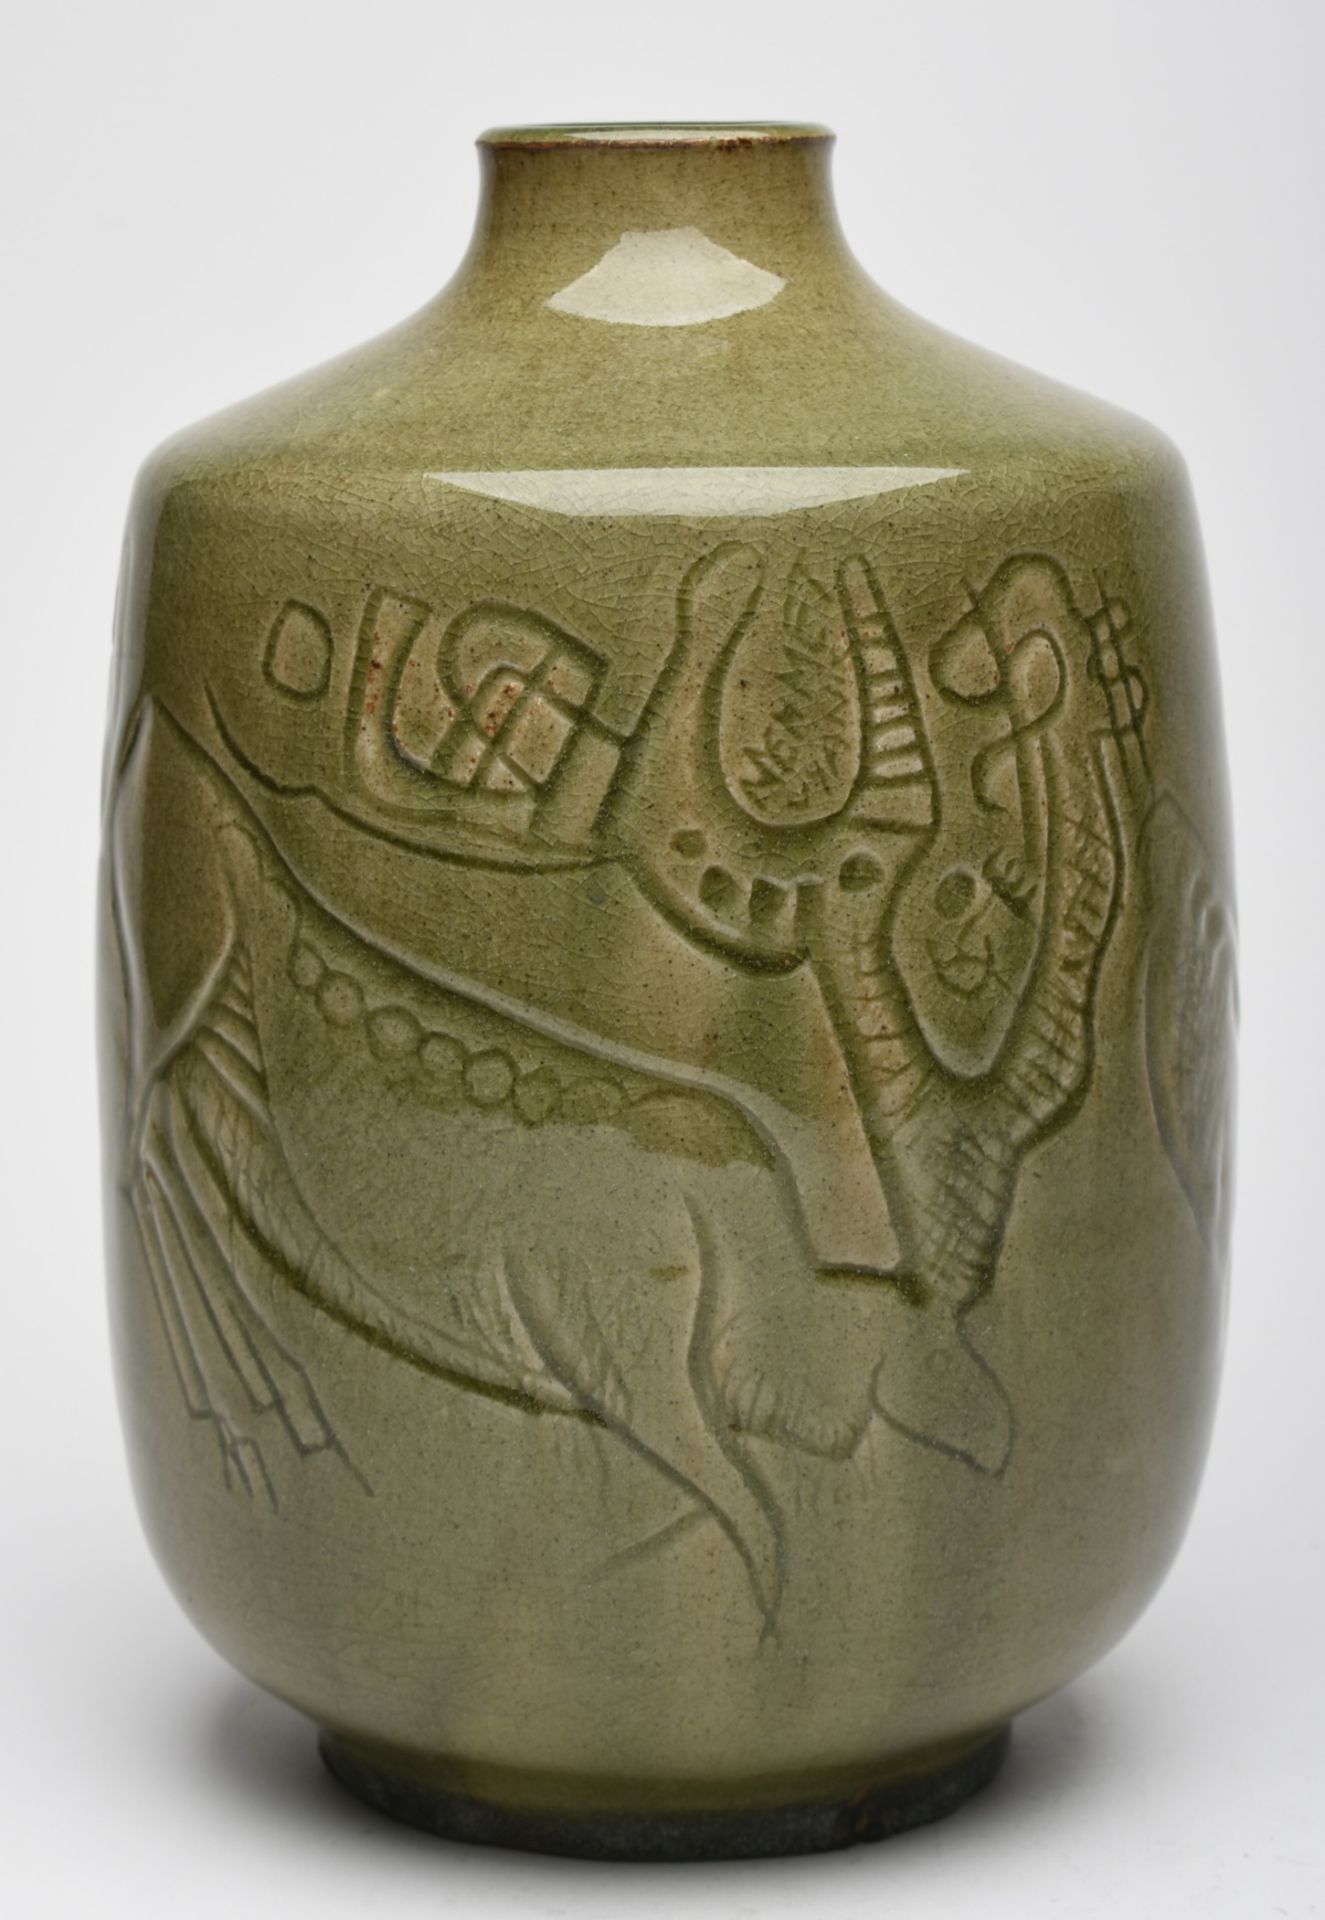 Uyanik, Mehmet (1946 Konya - tätig in Bergkamen) Keramikvase, gebauchte Ausformung mit - Bild 2 aus 3